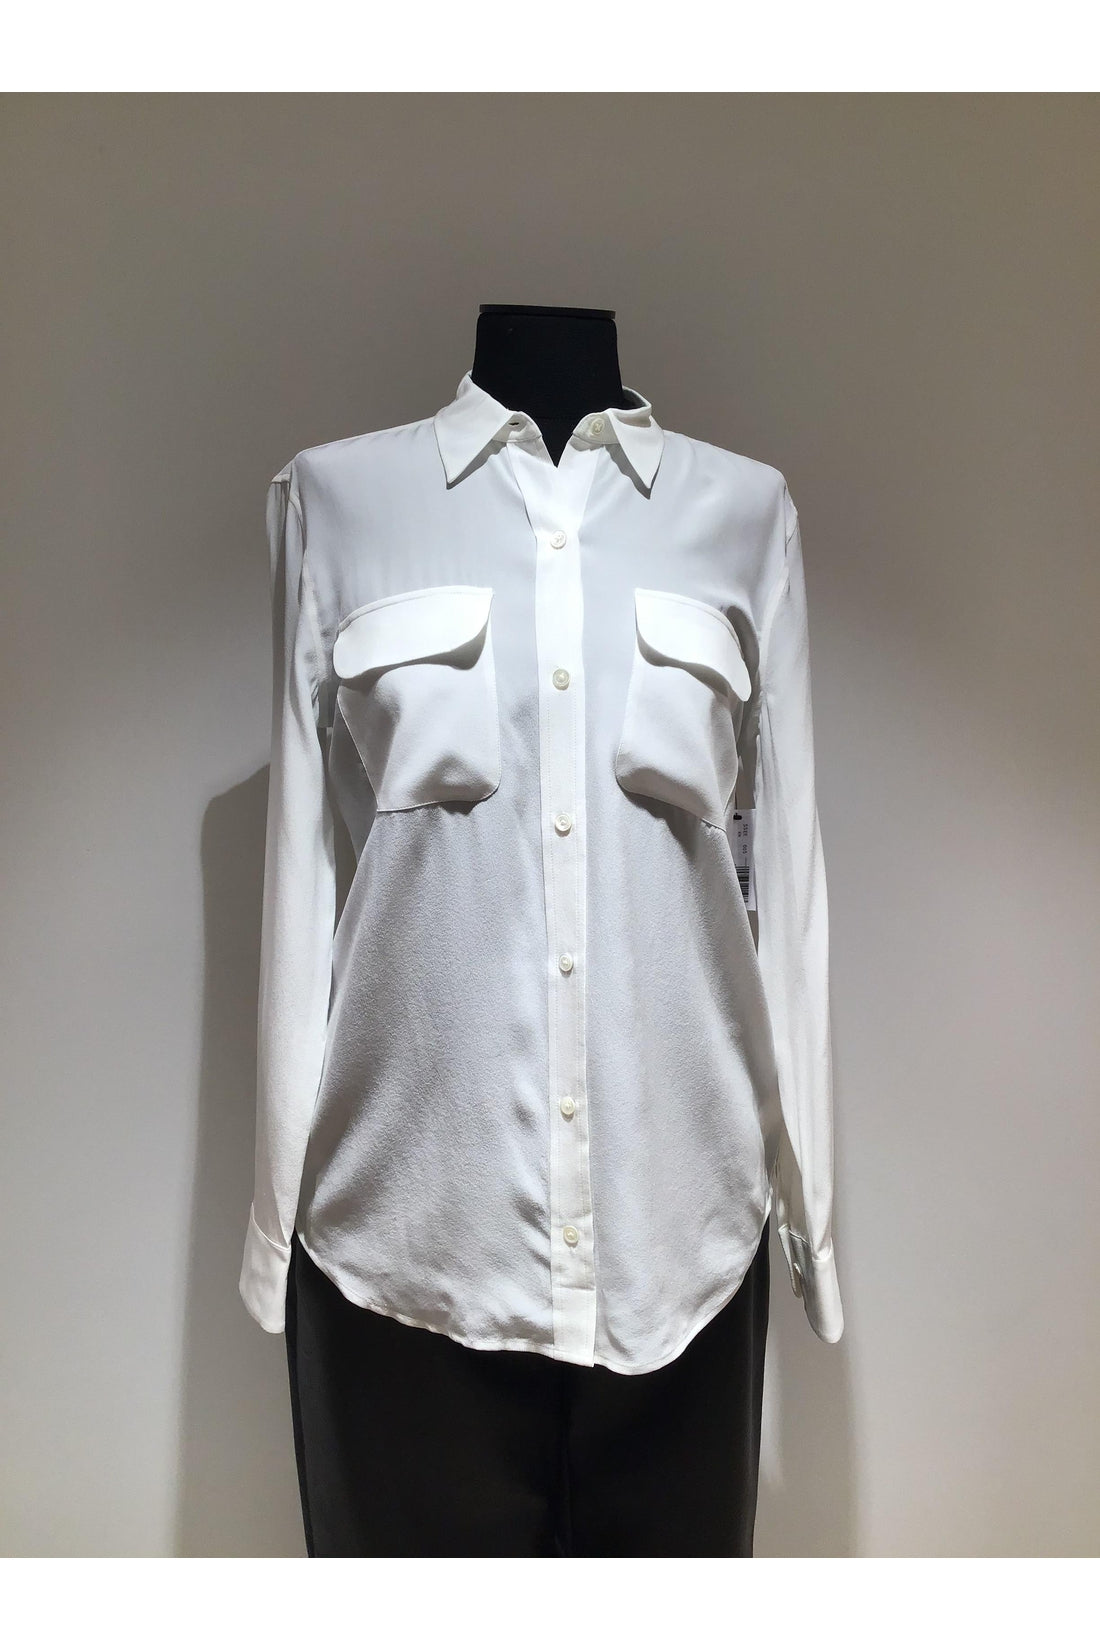 Piralo-OUTLET-SALE-Silk shirt-ARCHIVIST